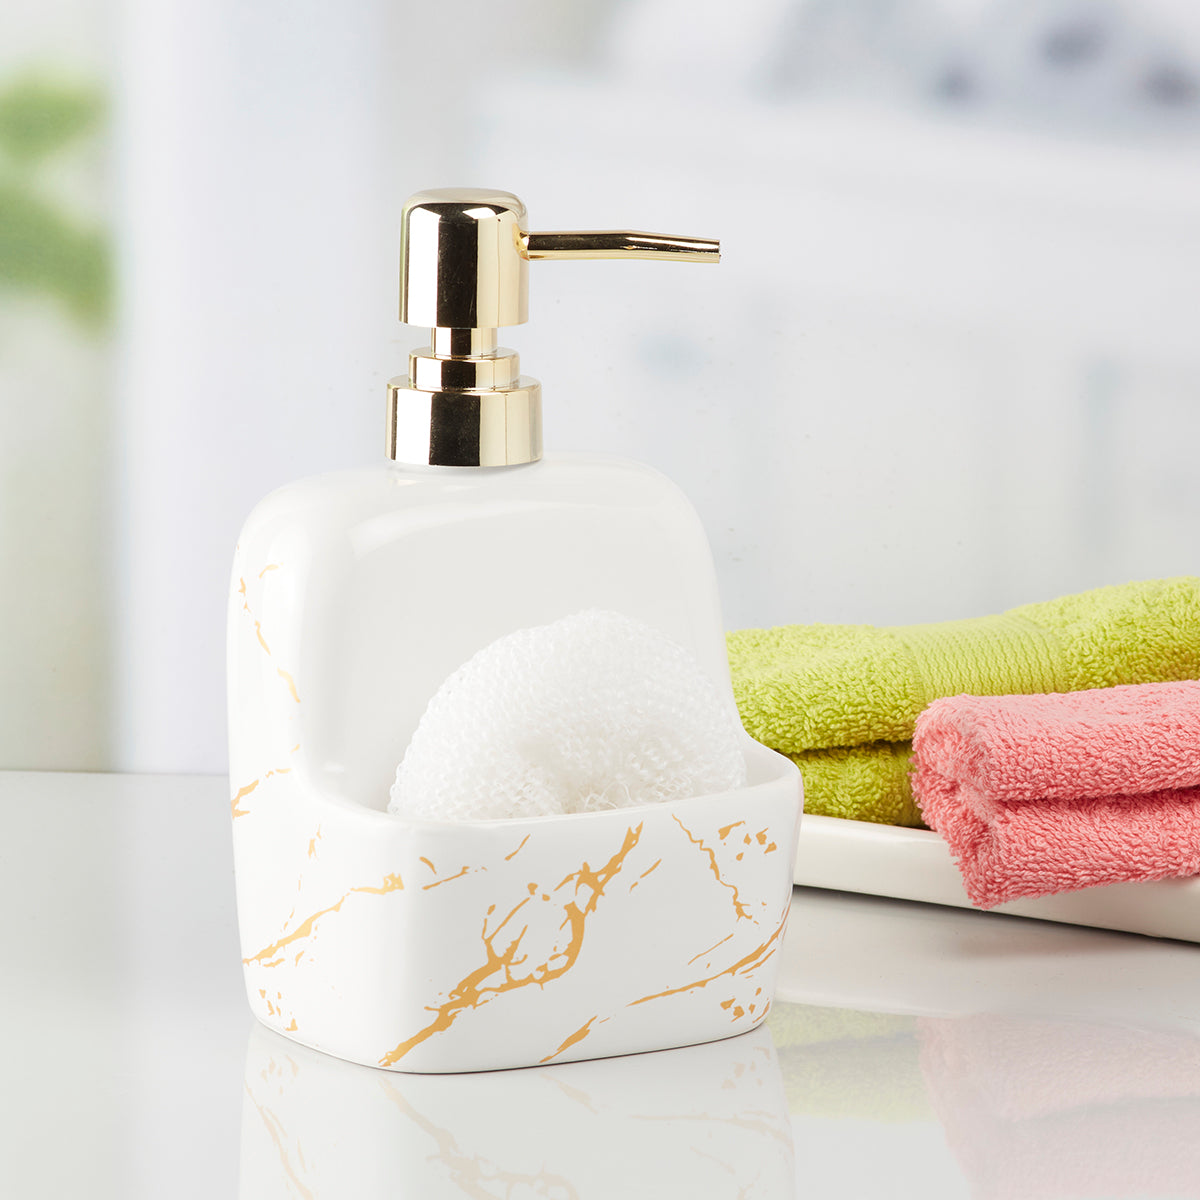 Ceramic Soap Dispenser handwash Pump for Bathroom, Set of 1, Grey/Gold (10205)